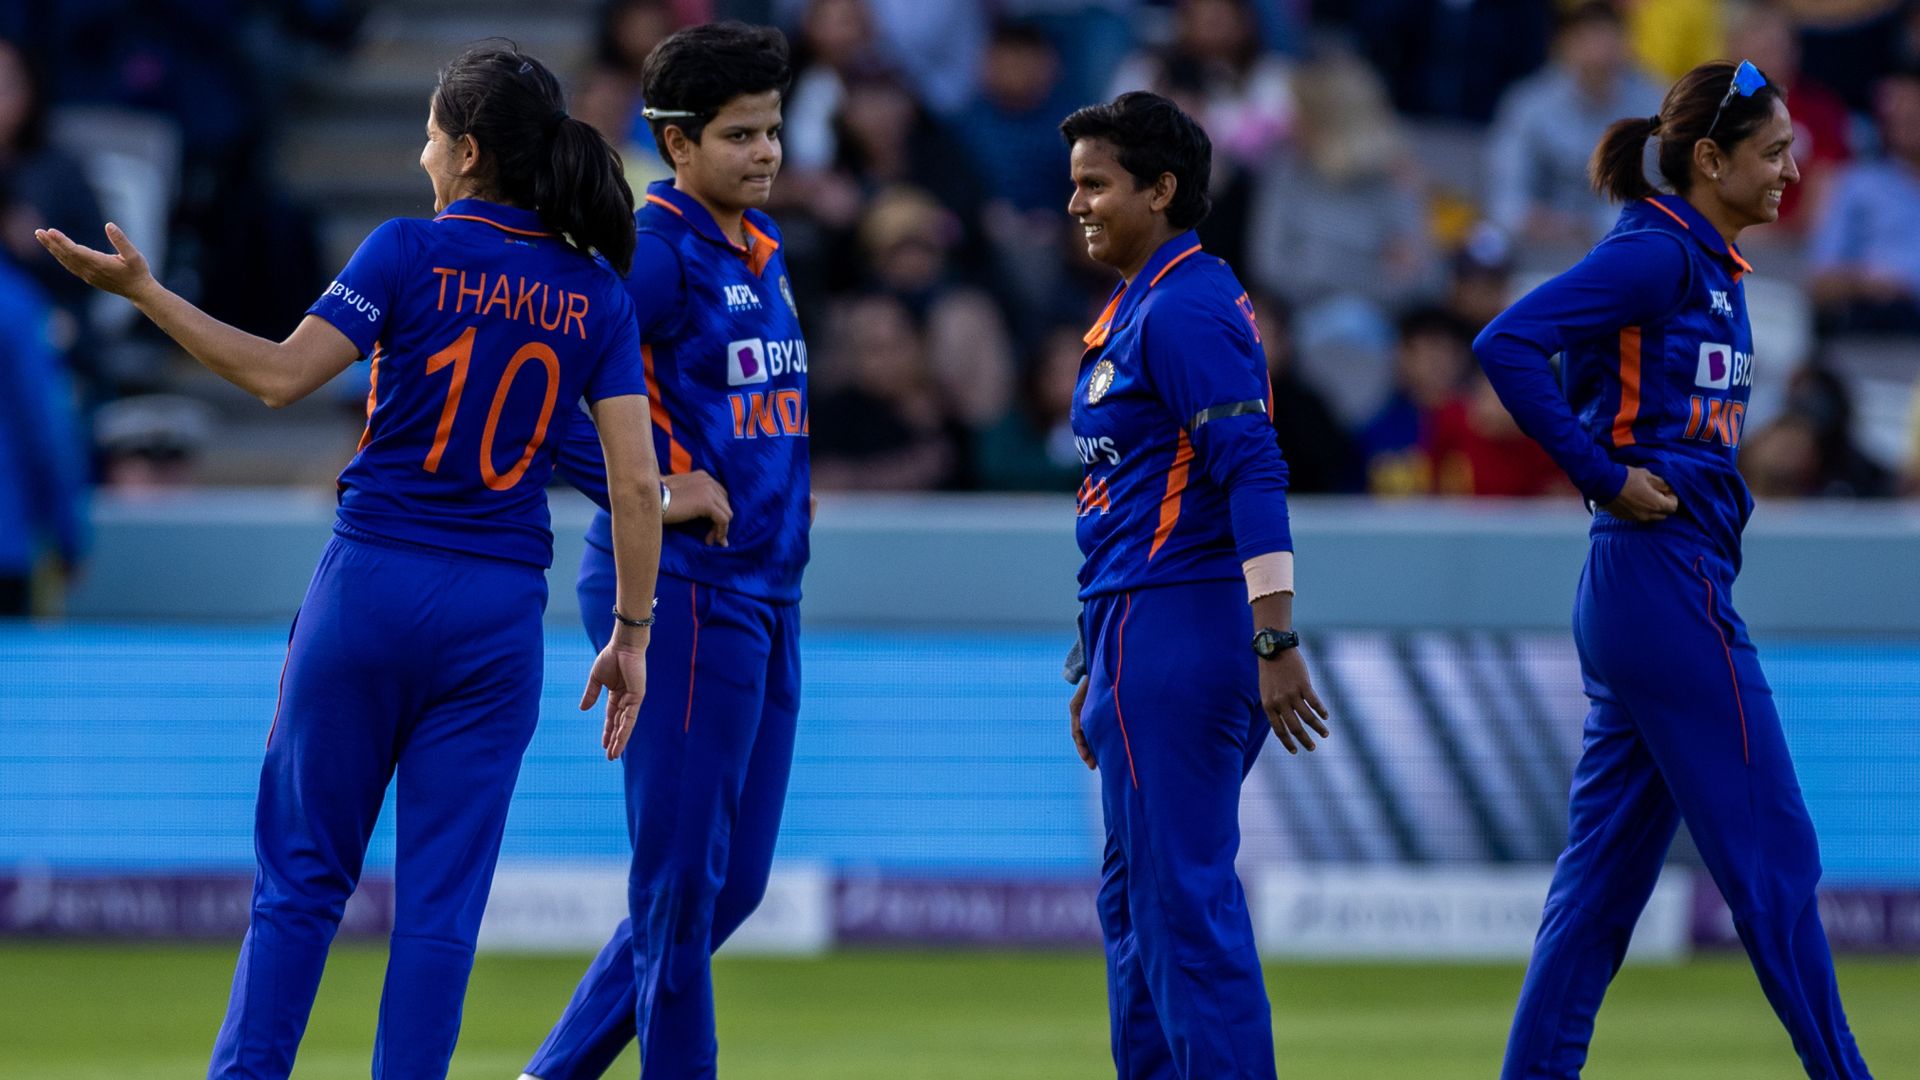 India defend 'Mankad' finish